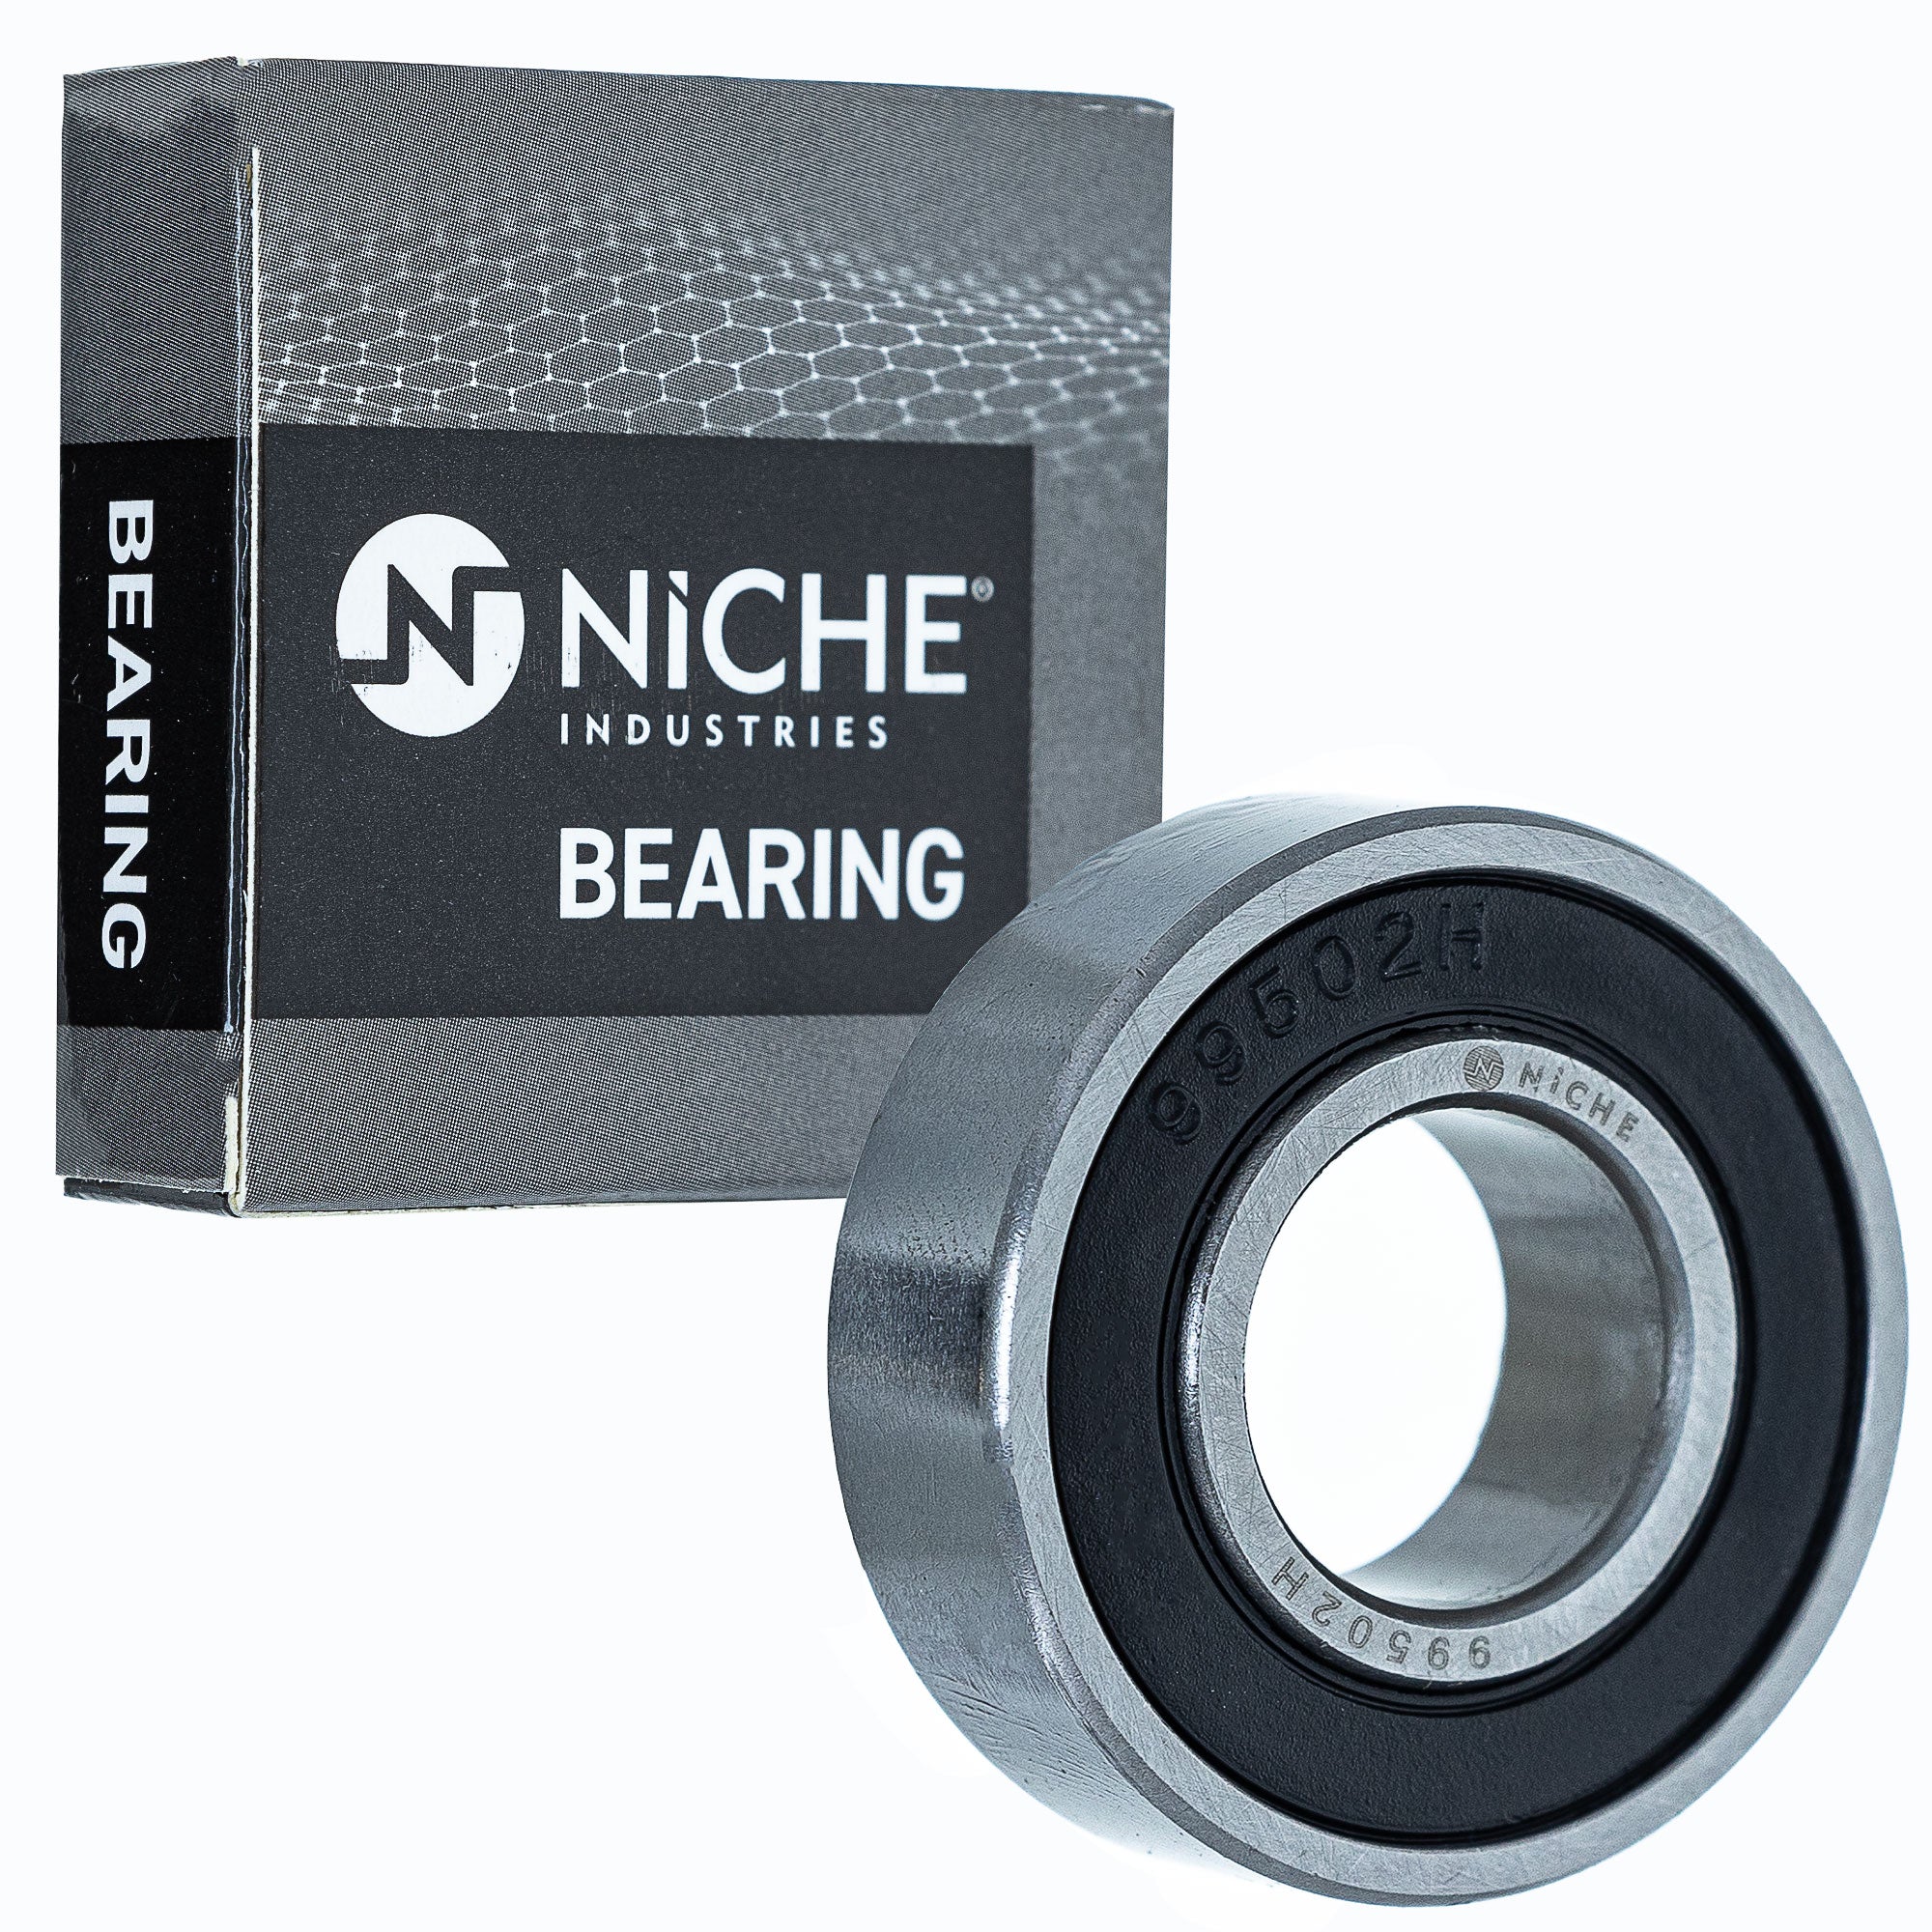 NICHE 519-CBB2237R Bearing 2-Pack for Ref No KLT250A KLT200C KLT200B